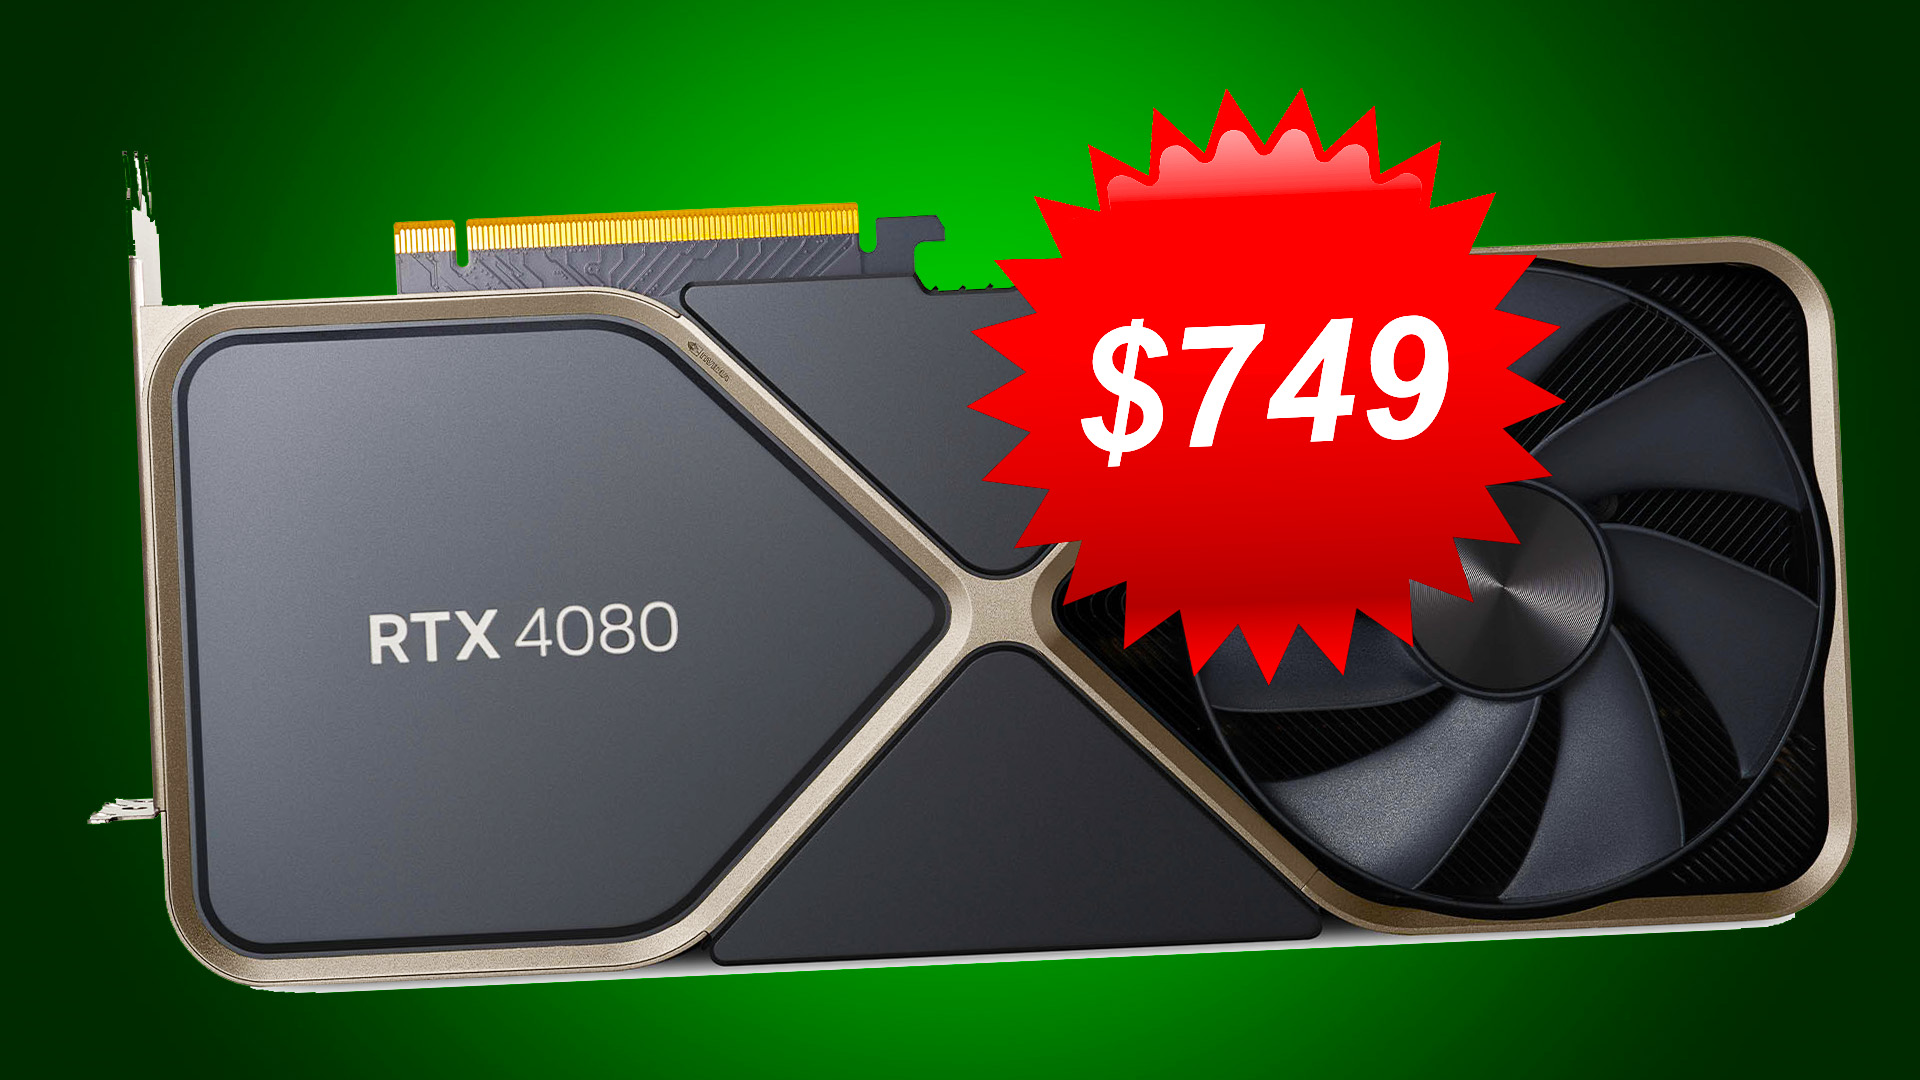 Imagine if the Nvidia GeForce RTX 4000 range wasn't a joke: RTX 4080 priced at $749